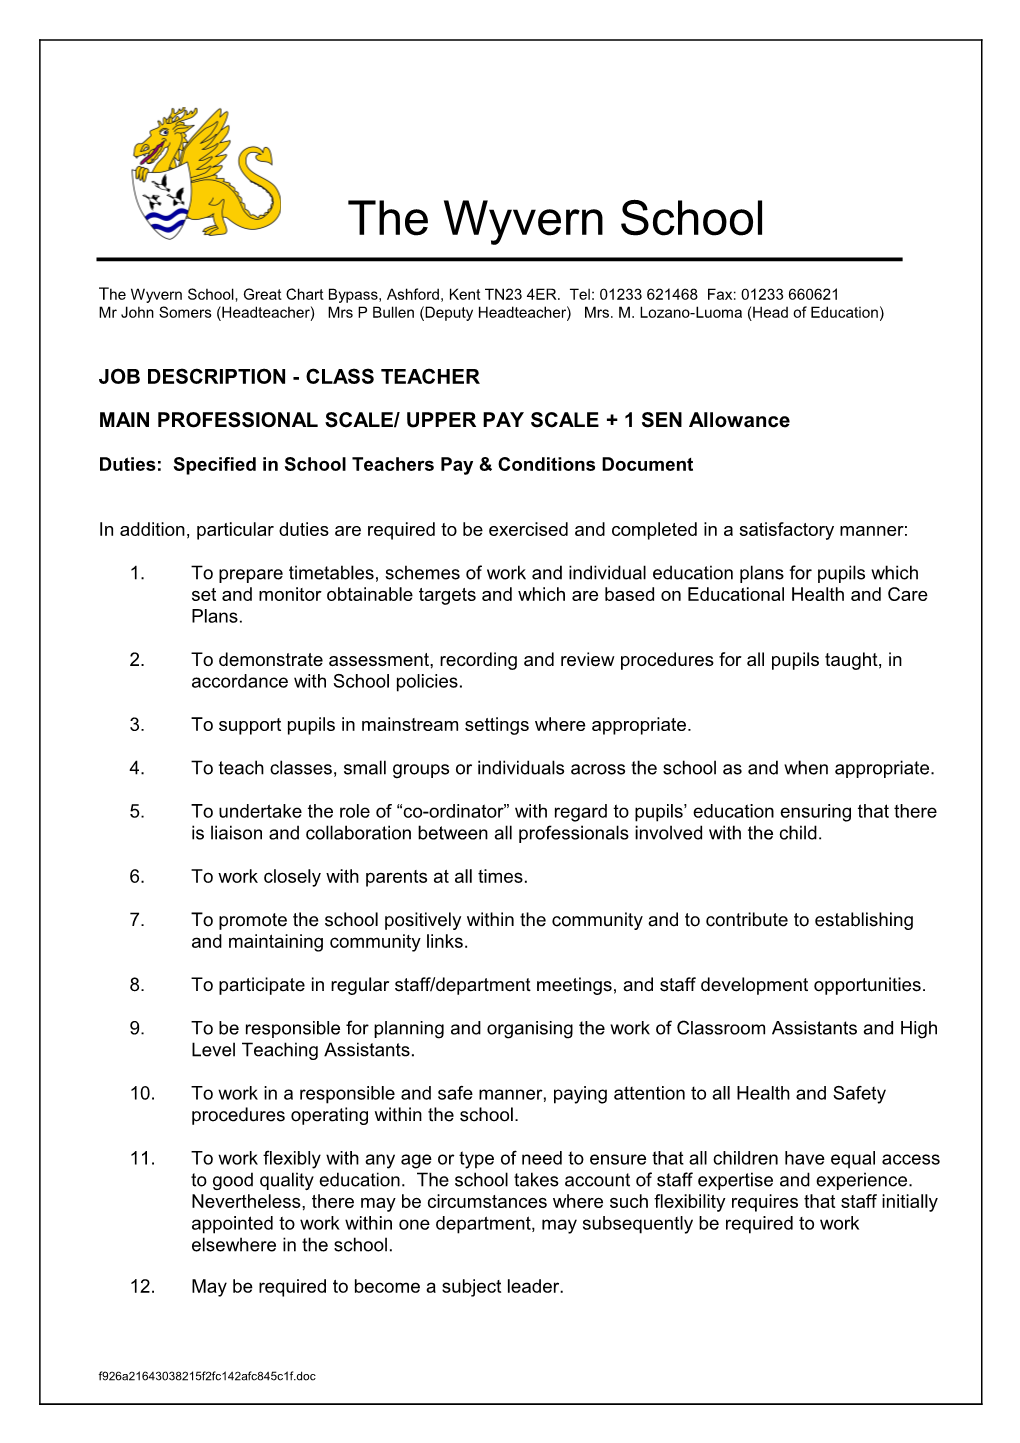 The Wyvern School Principal: Mr